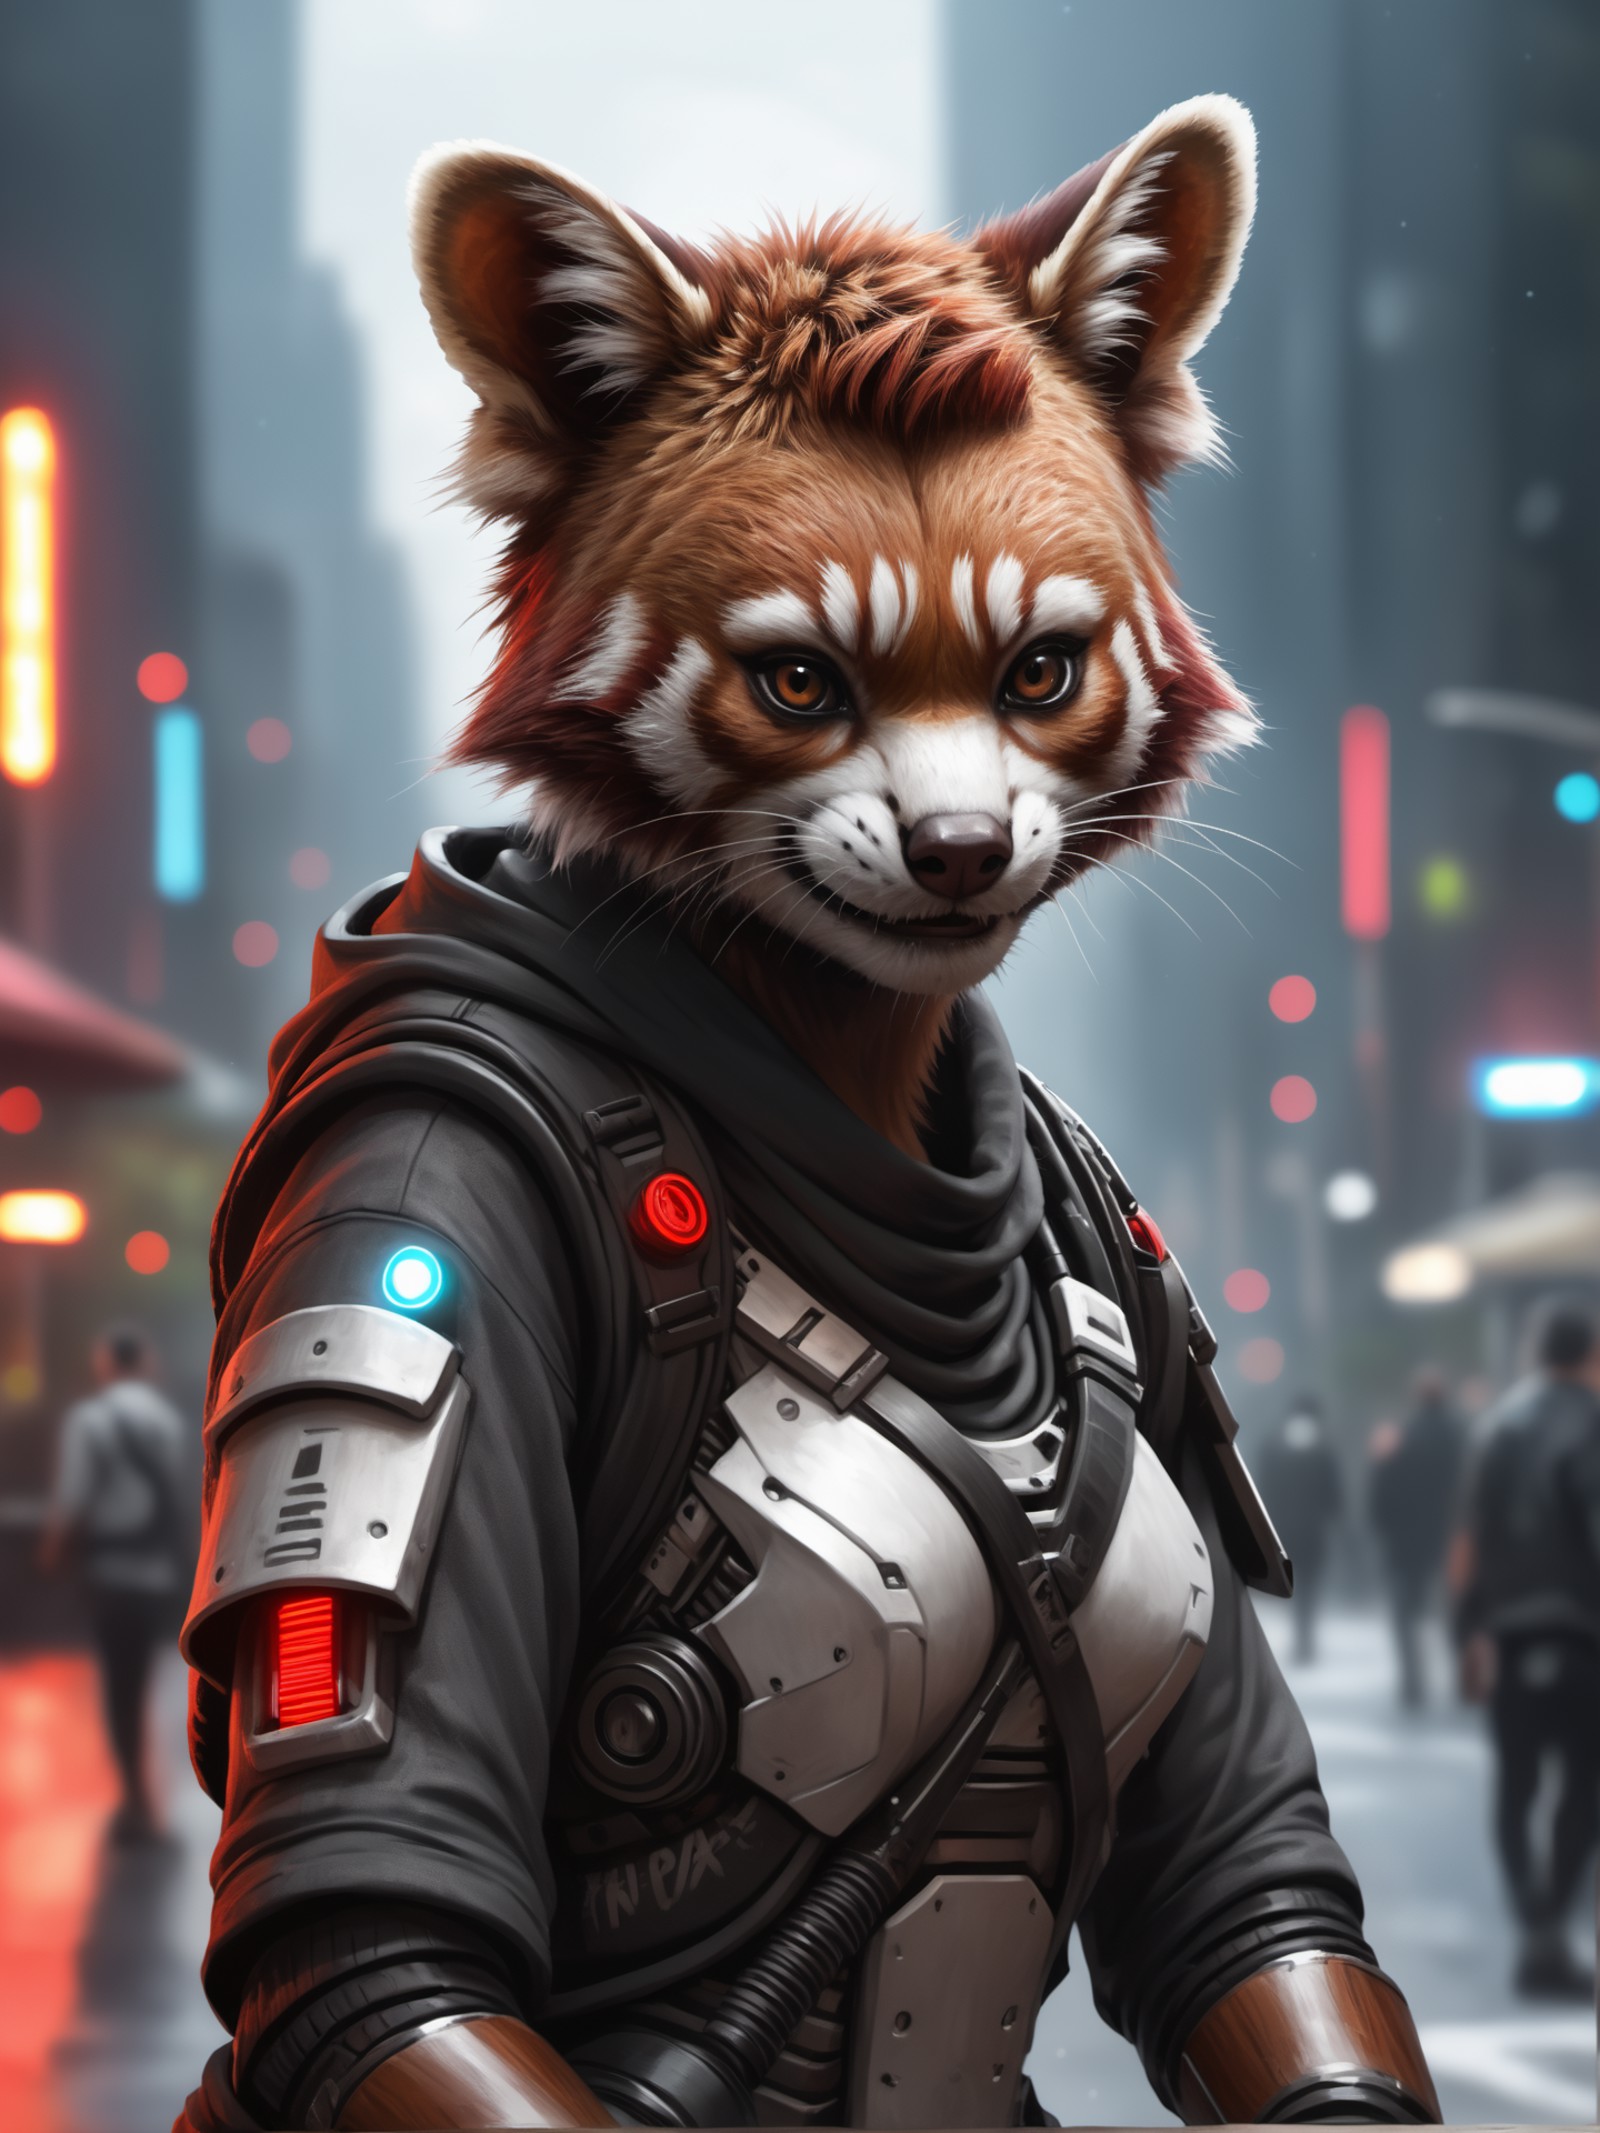 a red panda cyberpunk woman , detailed, realistic, 8k uhd, high quality